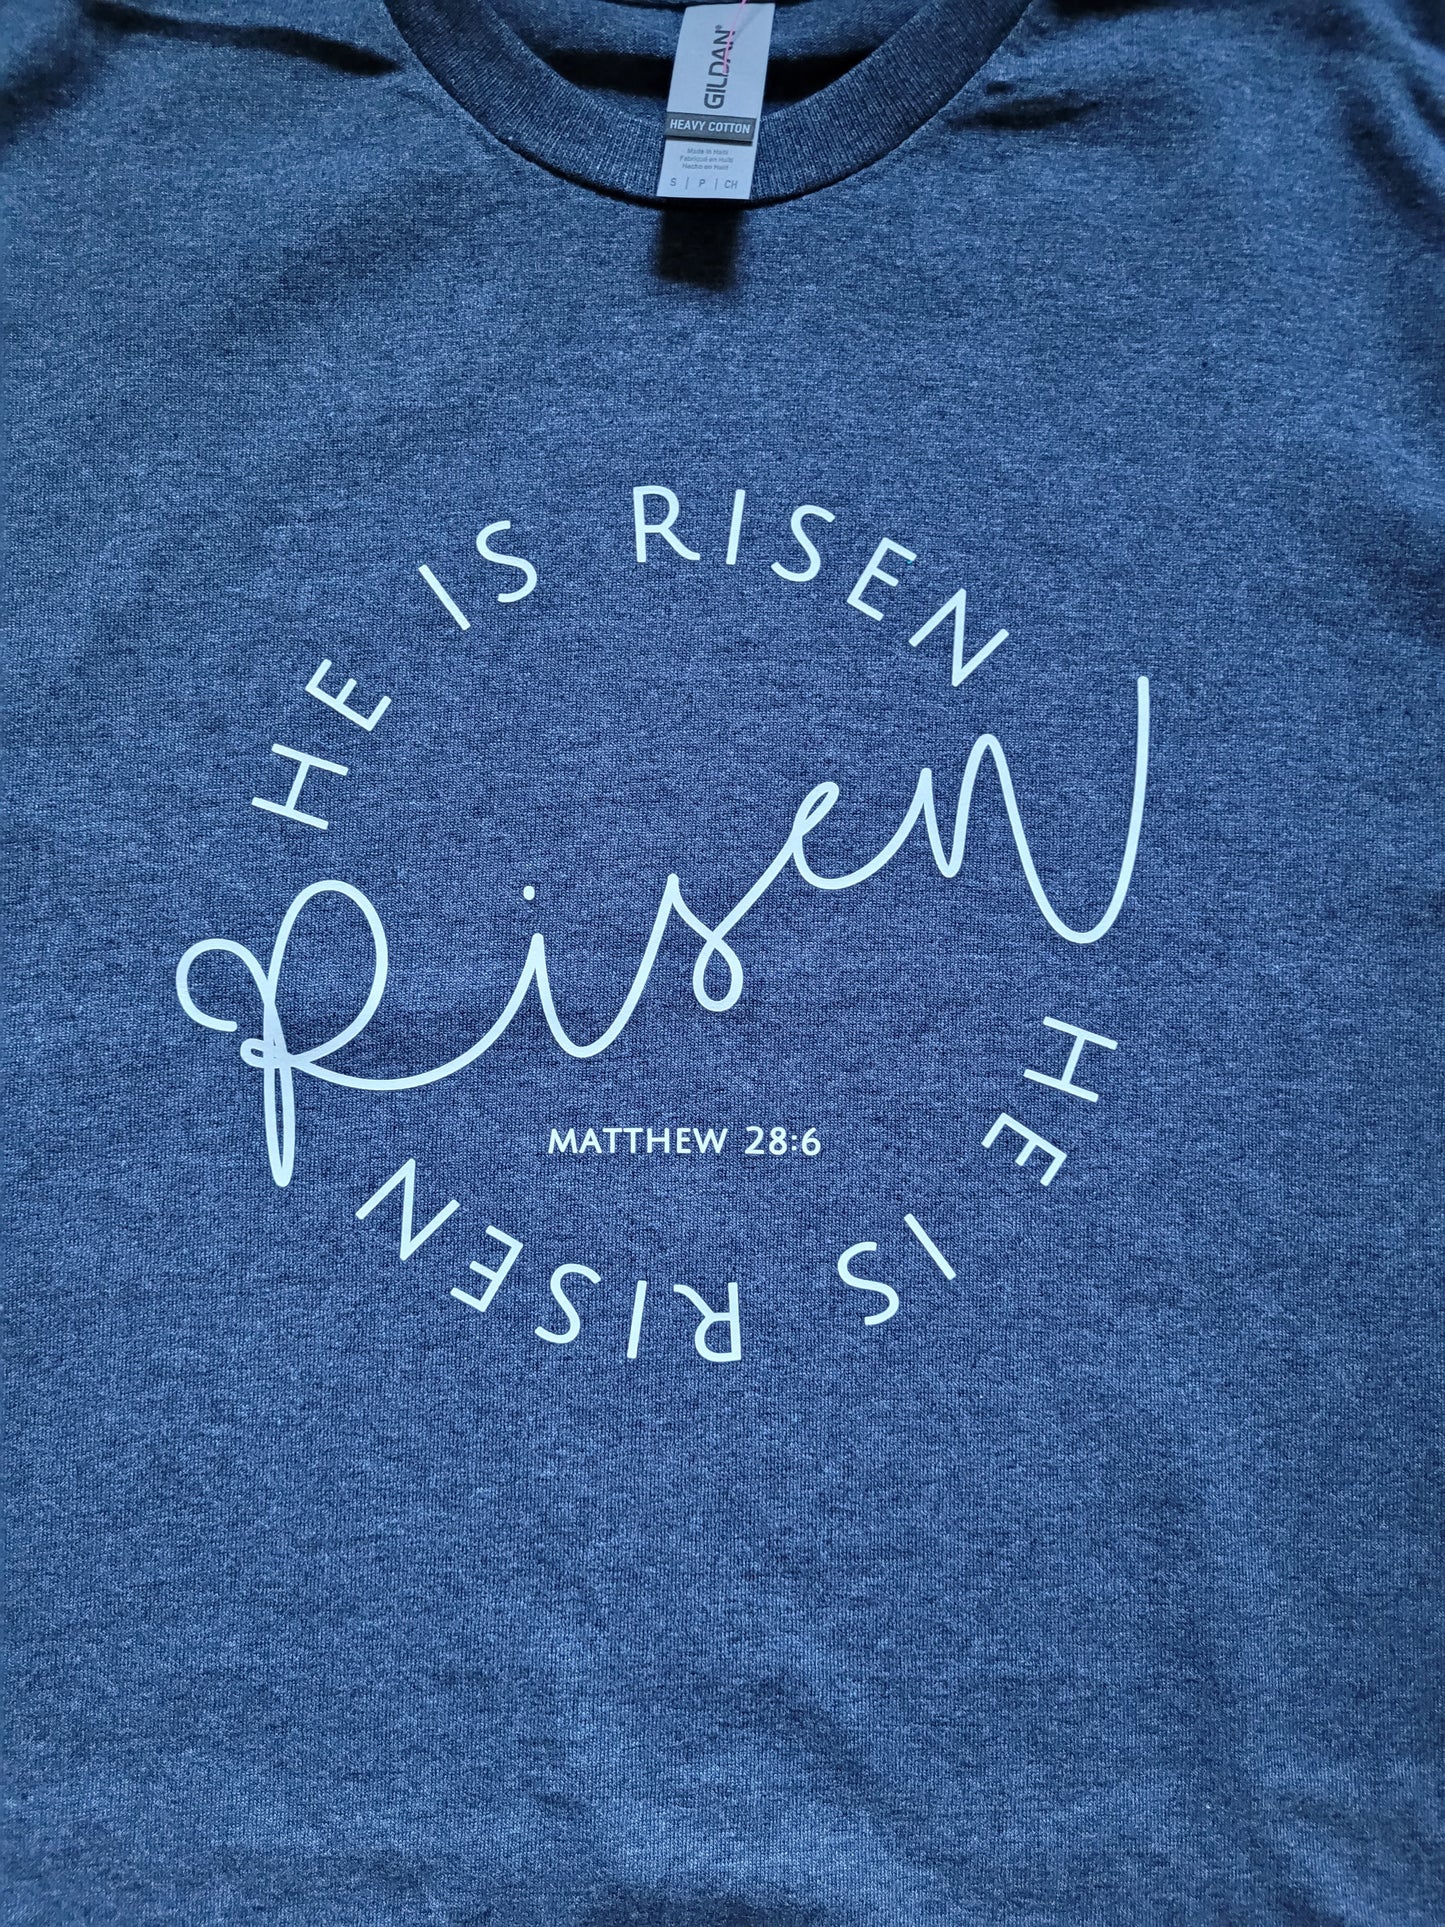 "He is Risen" Graphic Tee